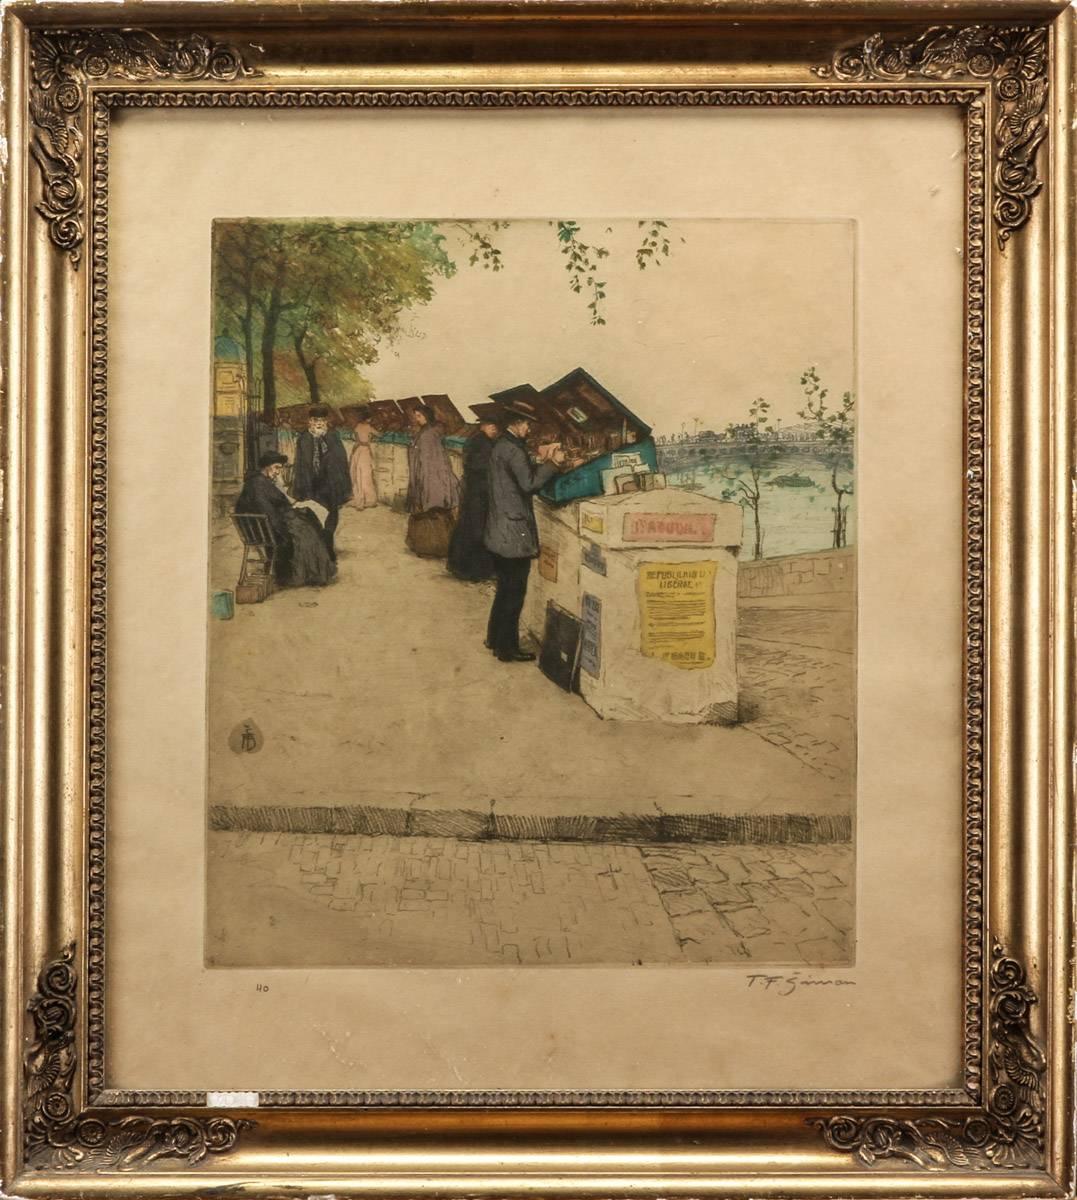 Tavik Frantisek Simon (1877-1942). 
Scene from the Seine, Paris. Colored etching. 
Dimensions: 
38 x 32 cm. (60 x 54) cm.